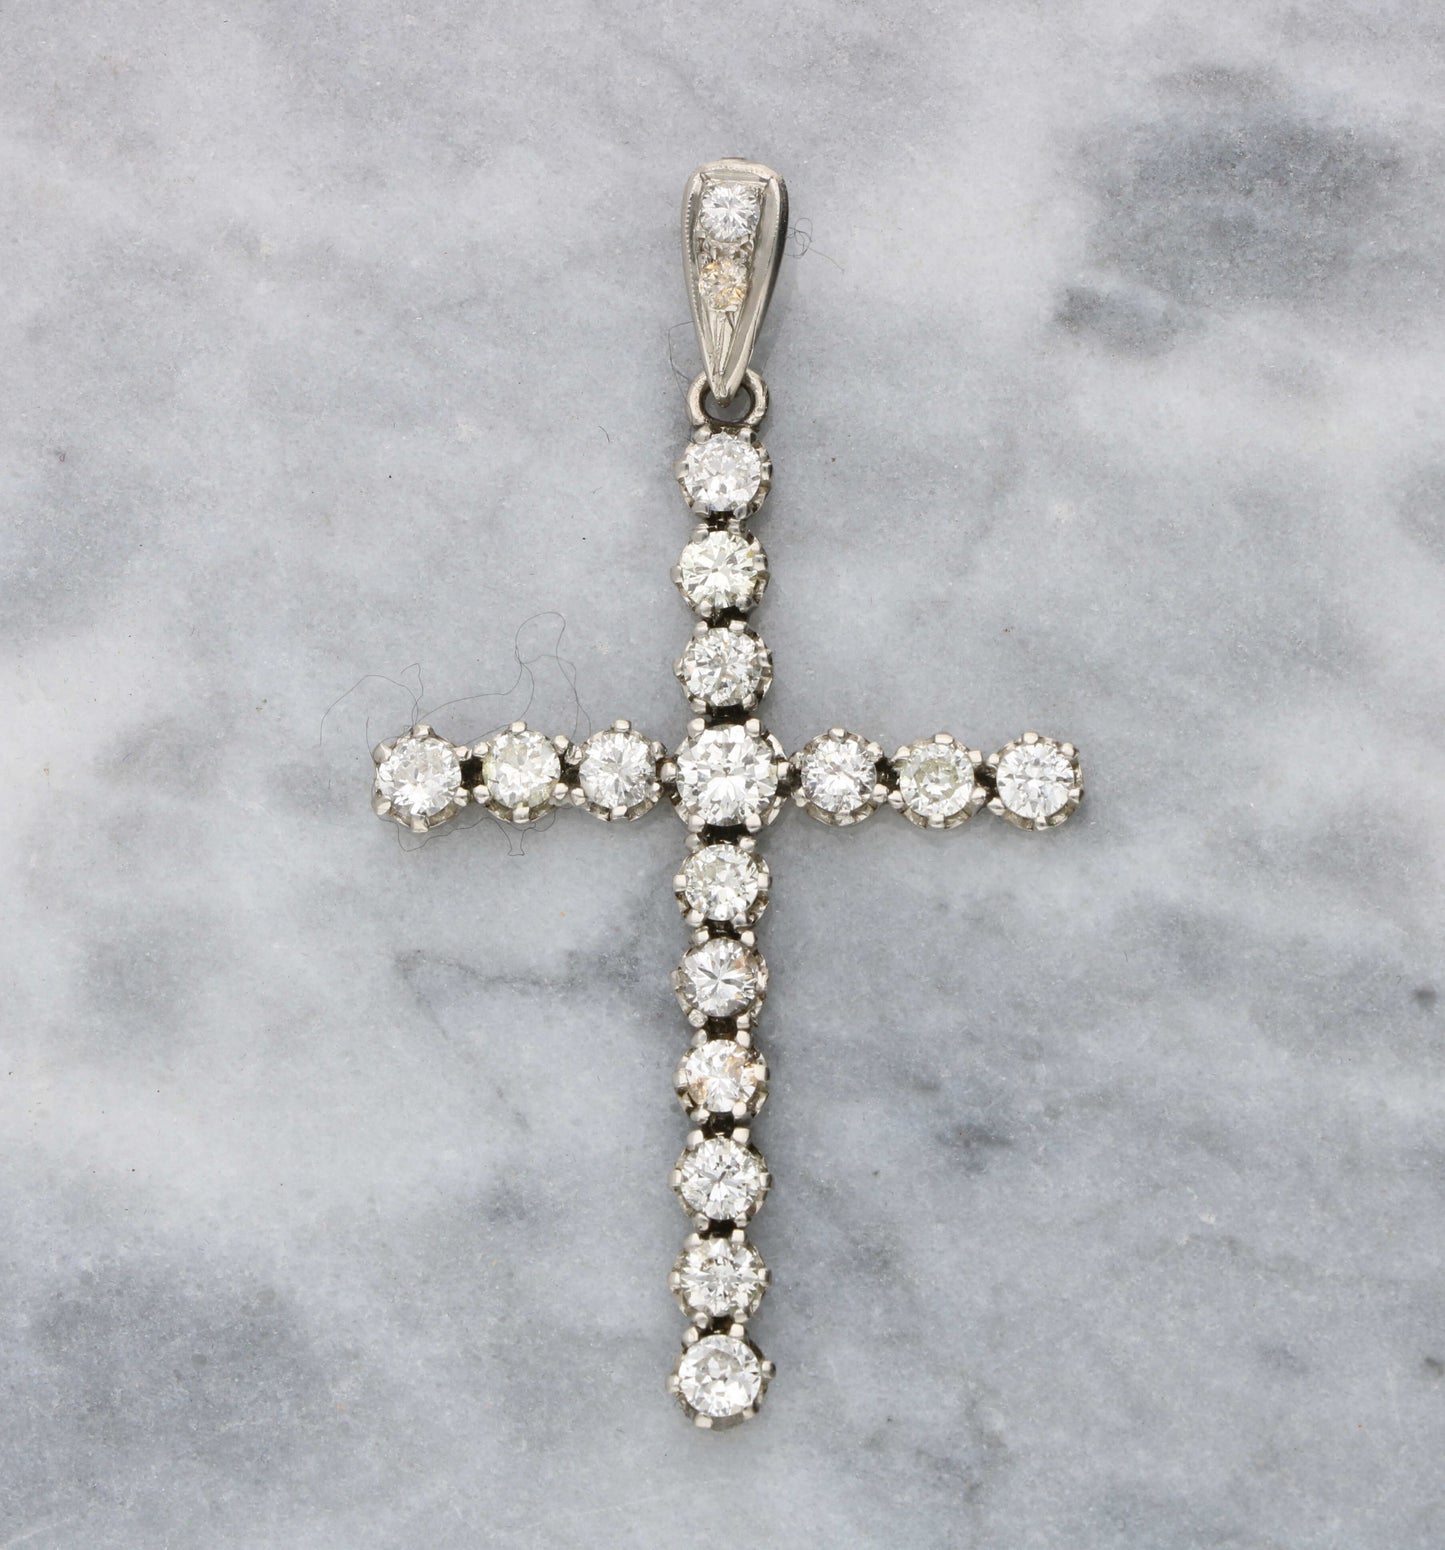 Diamond-set cross pendant